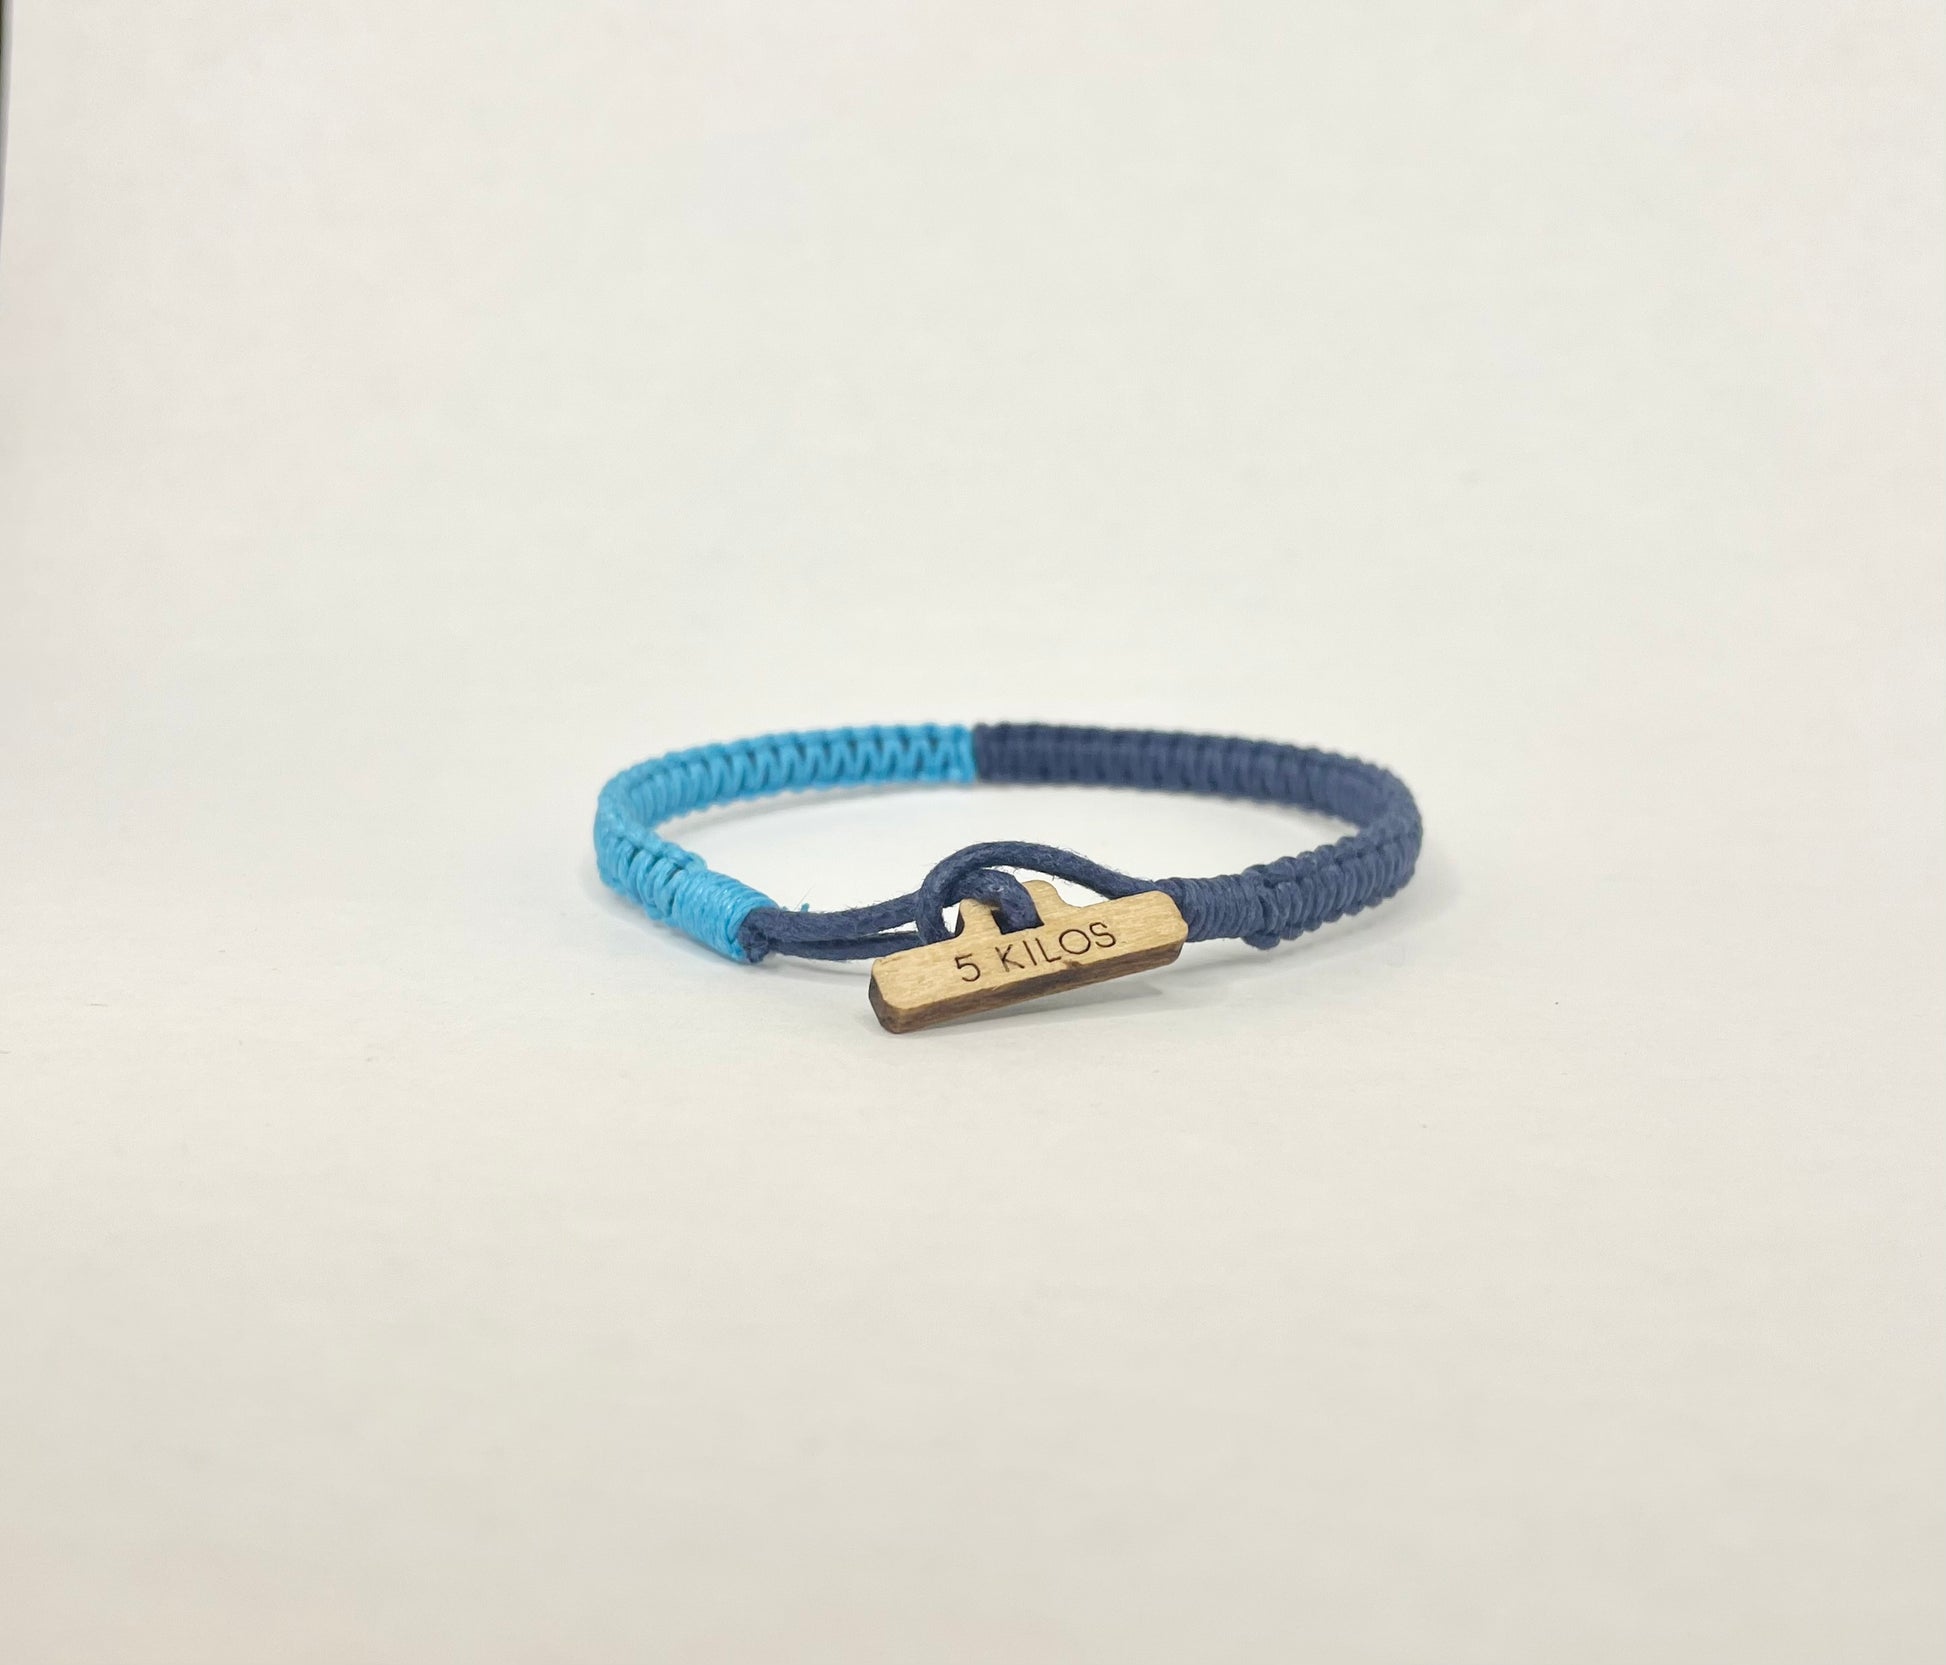 5 KG CleanSea bracelet - CleanSea